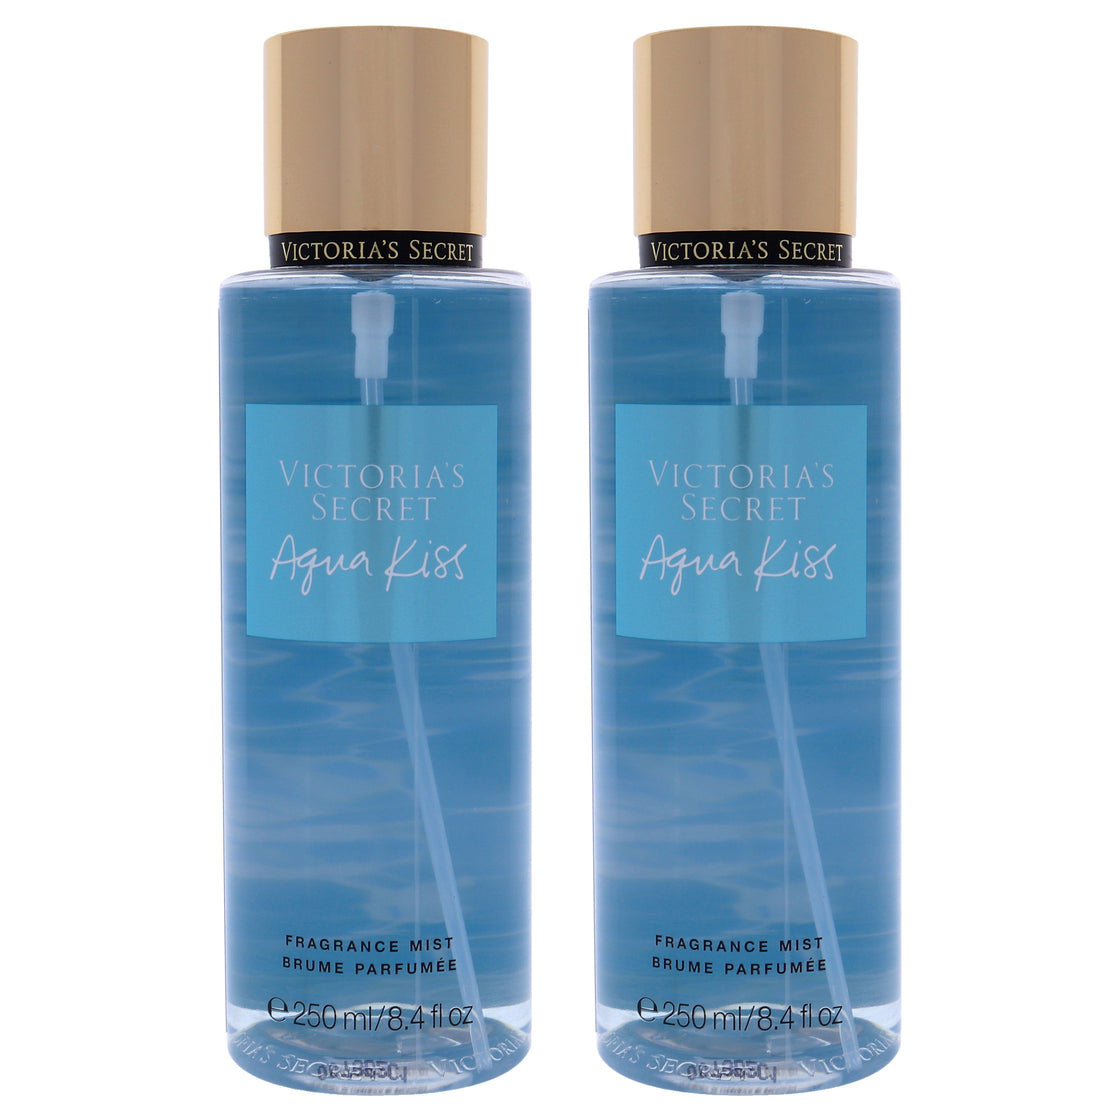 Aqua Kiss by Victorias Secret for Women - 8.4 oz Fragrance Mist - Pack of 2